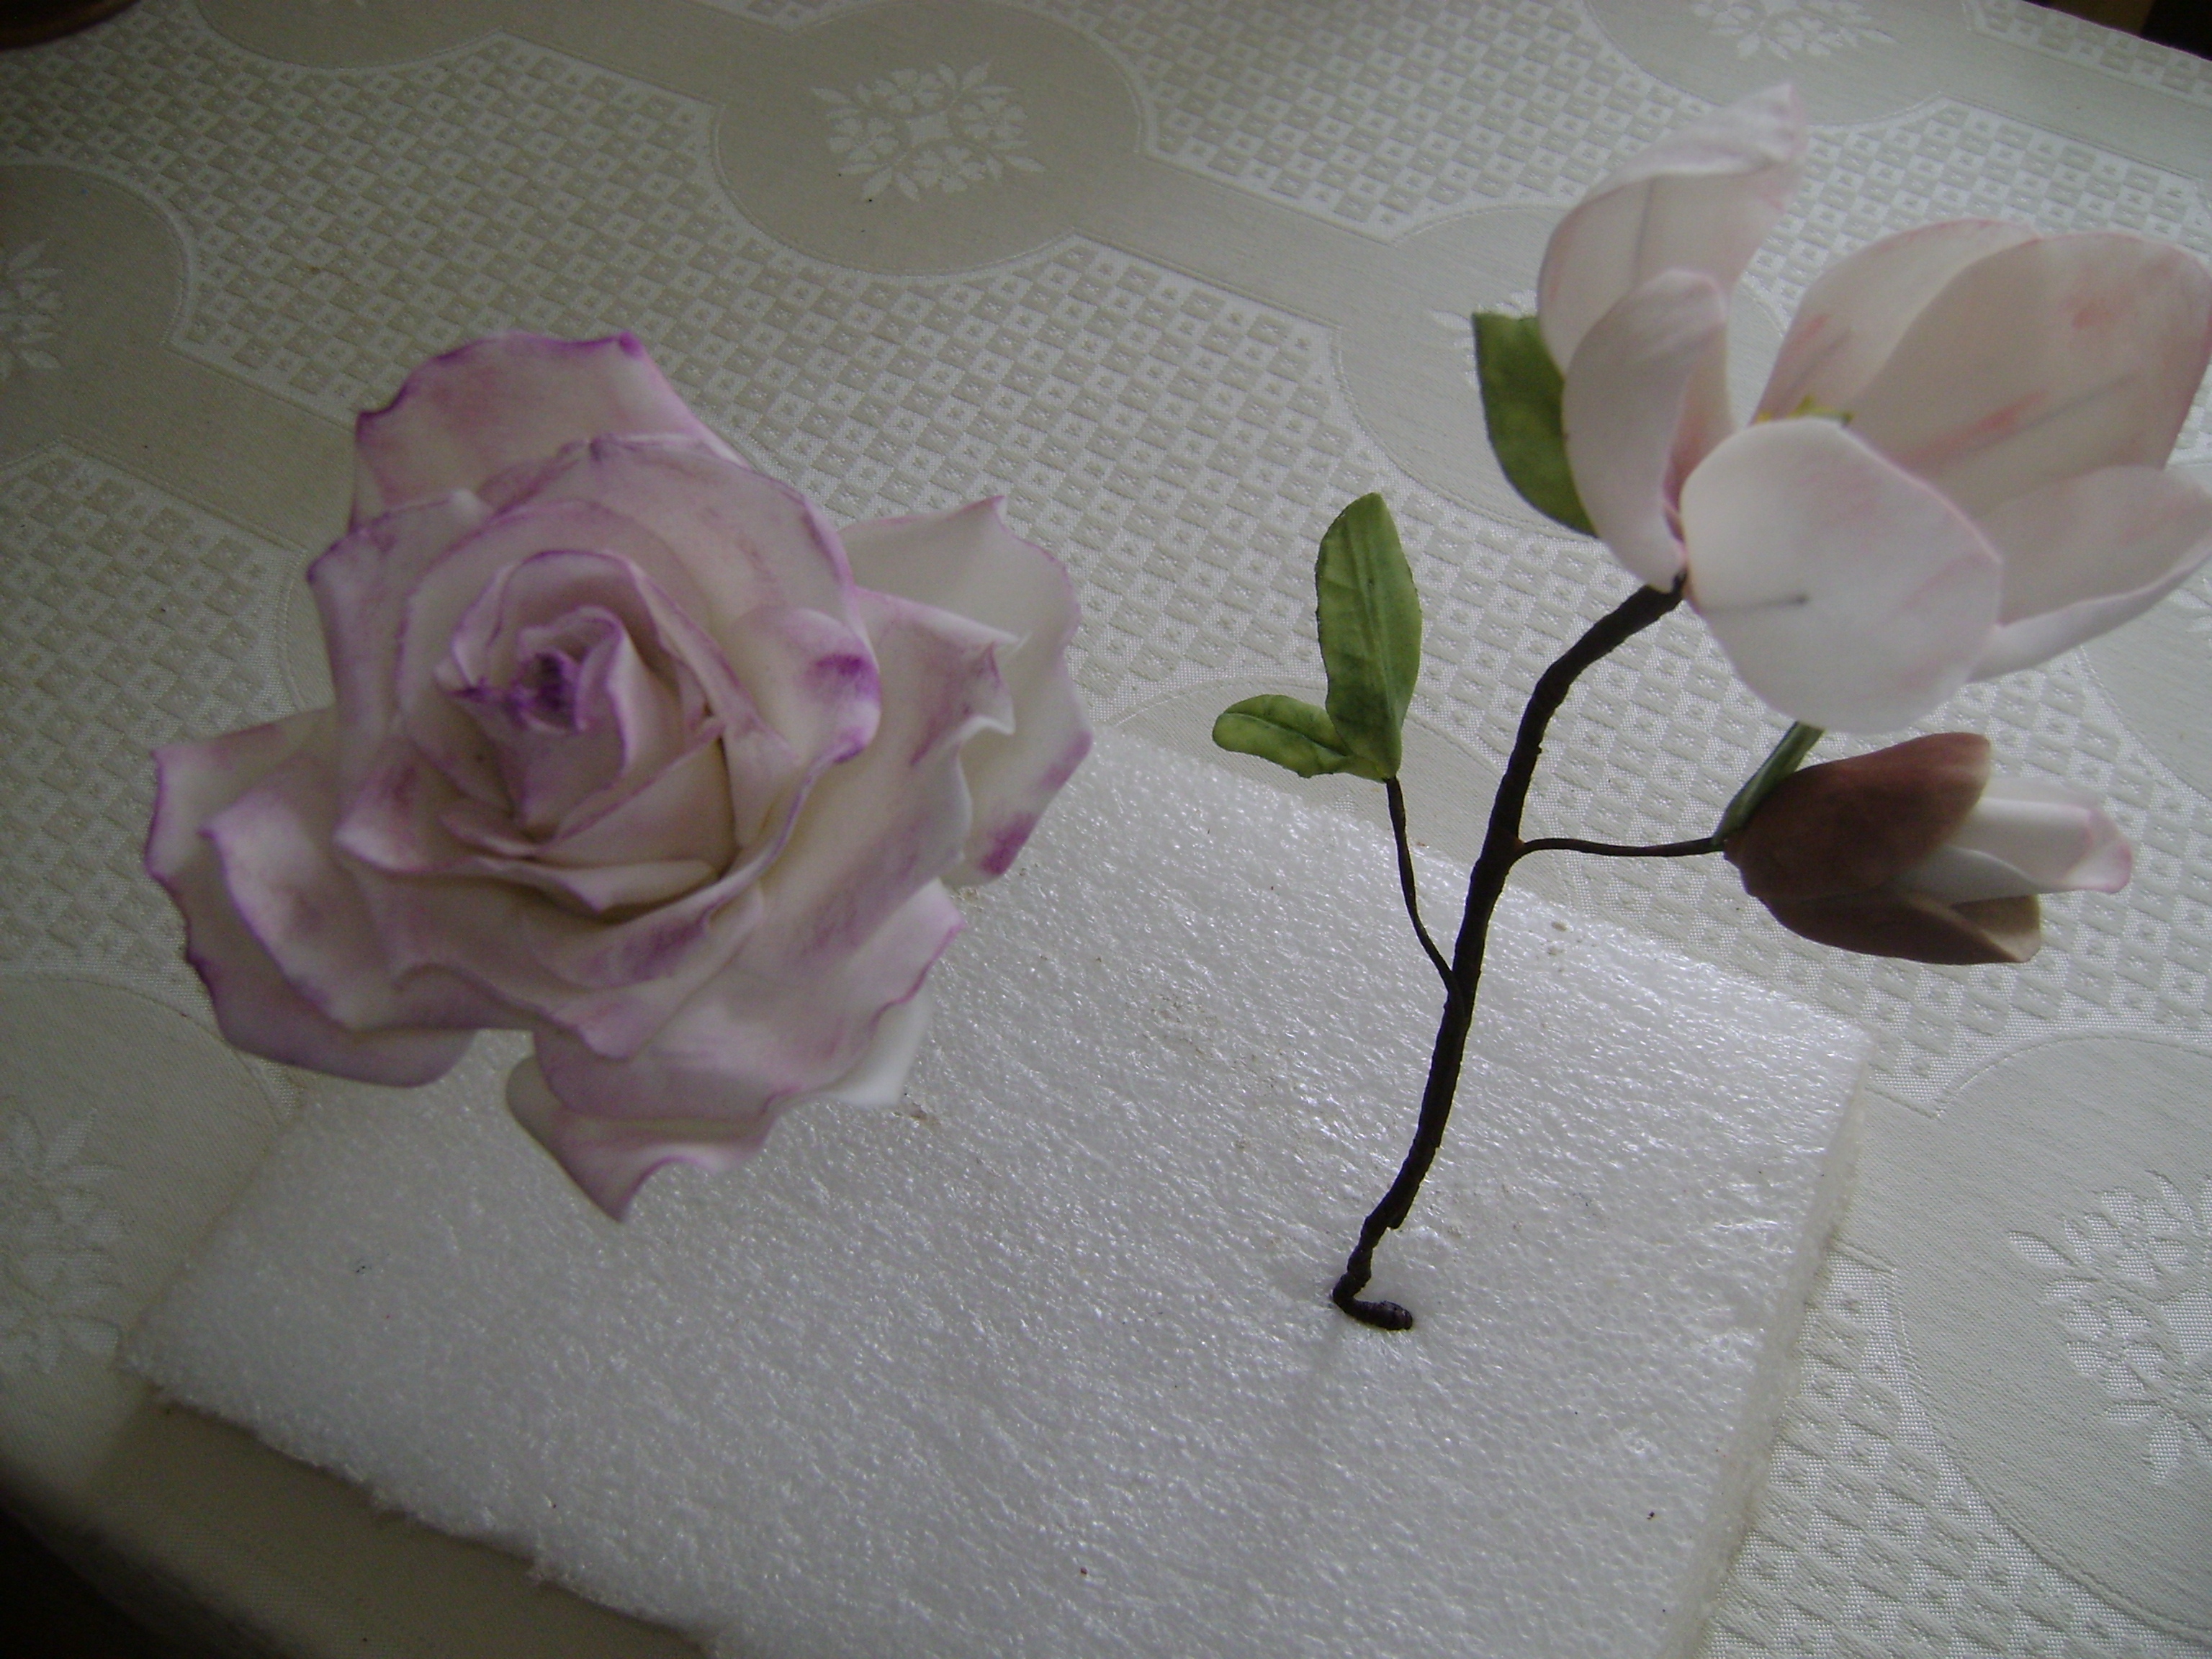 růže a magnolie s cukrové hmoty,na kurzu v Plzni